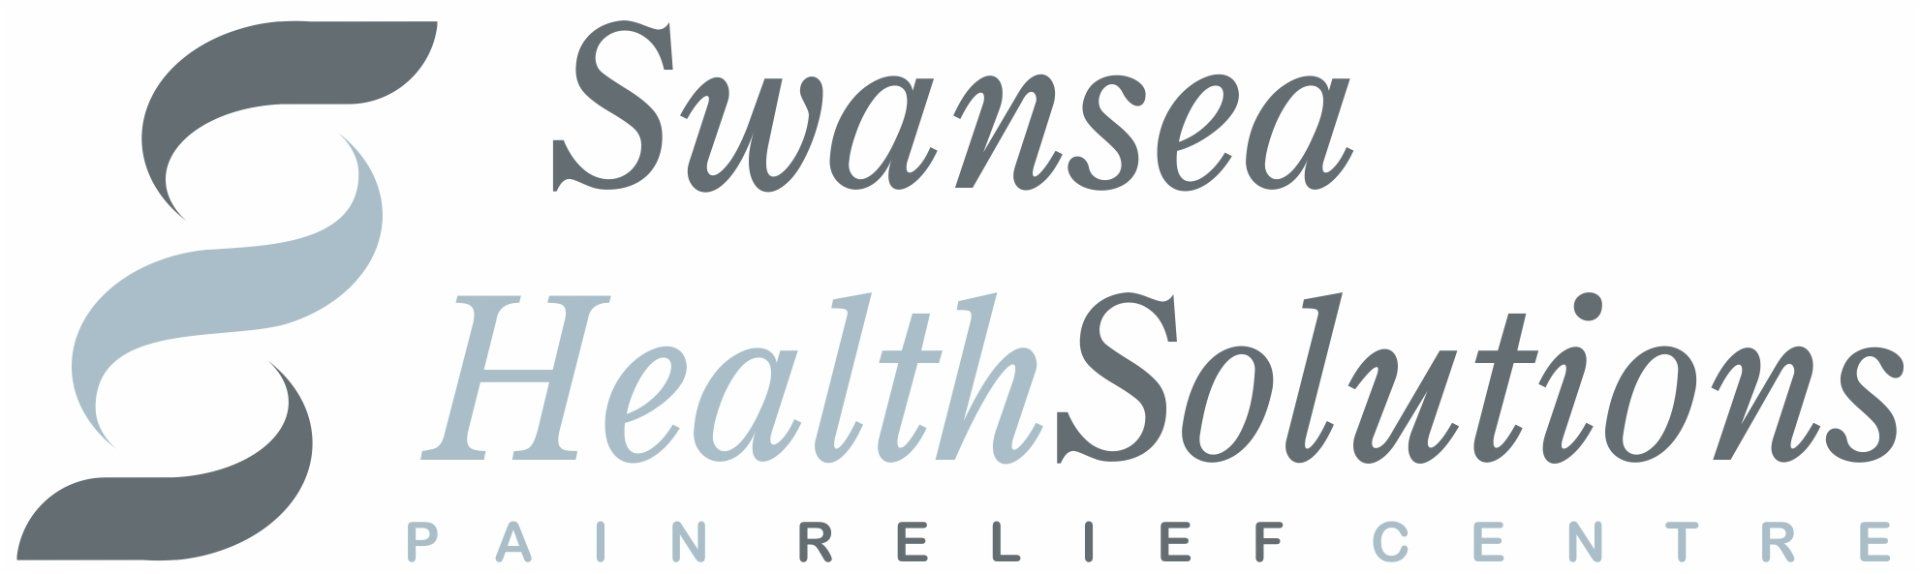 (c) Swanseahealthsolutions.co.uk